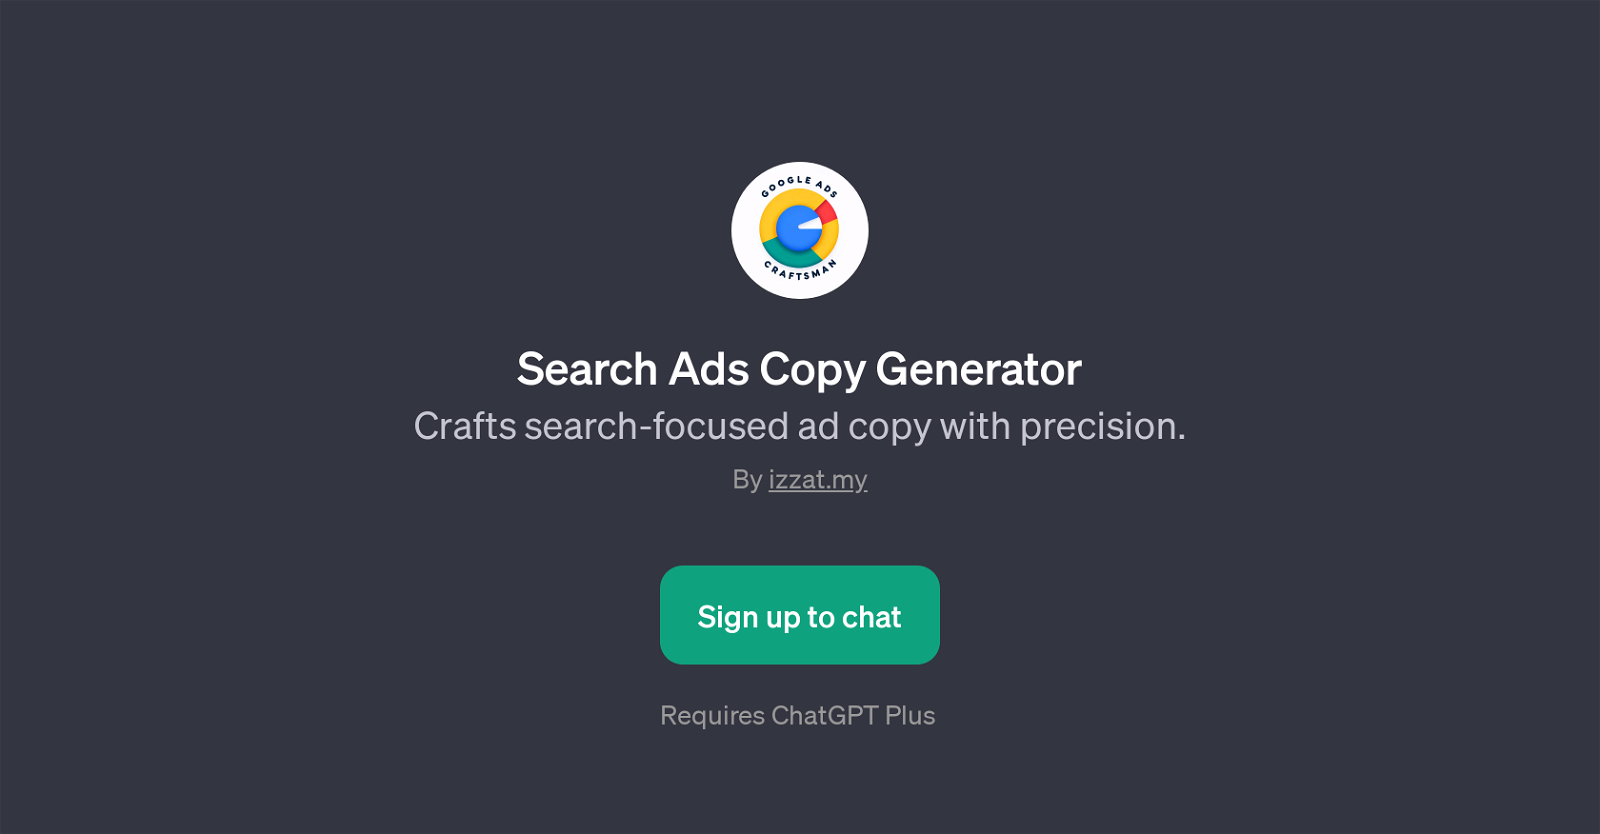 Search Ads Copy Generator website